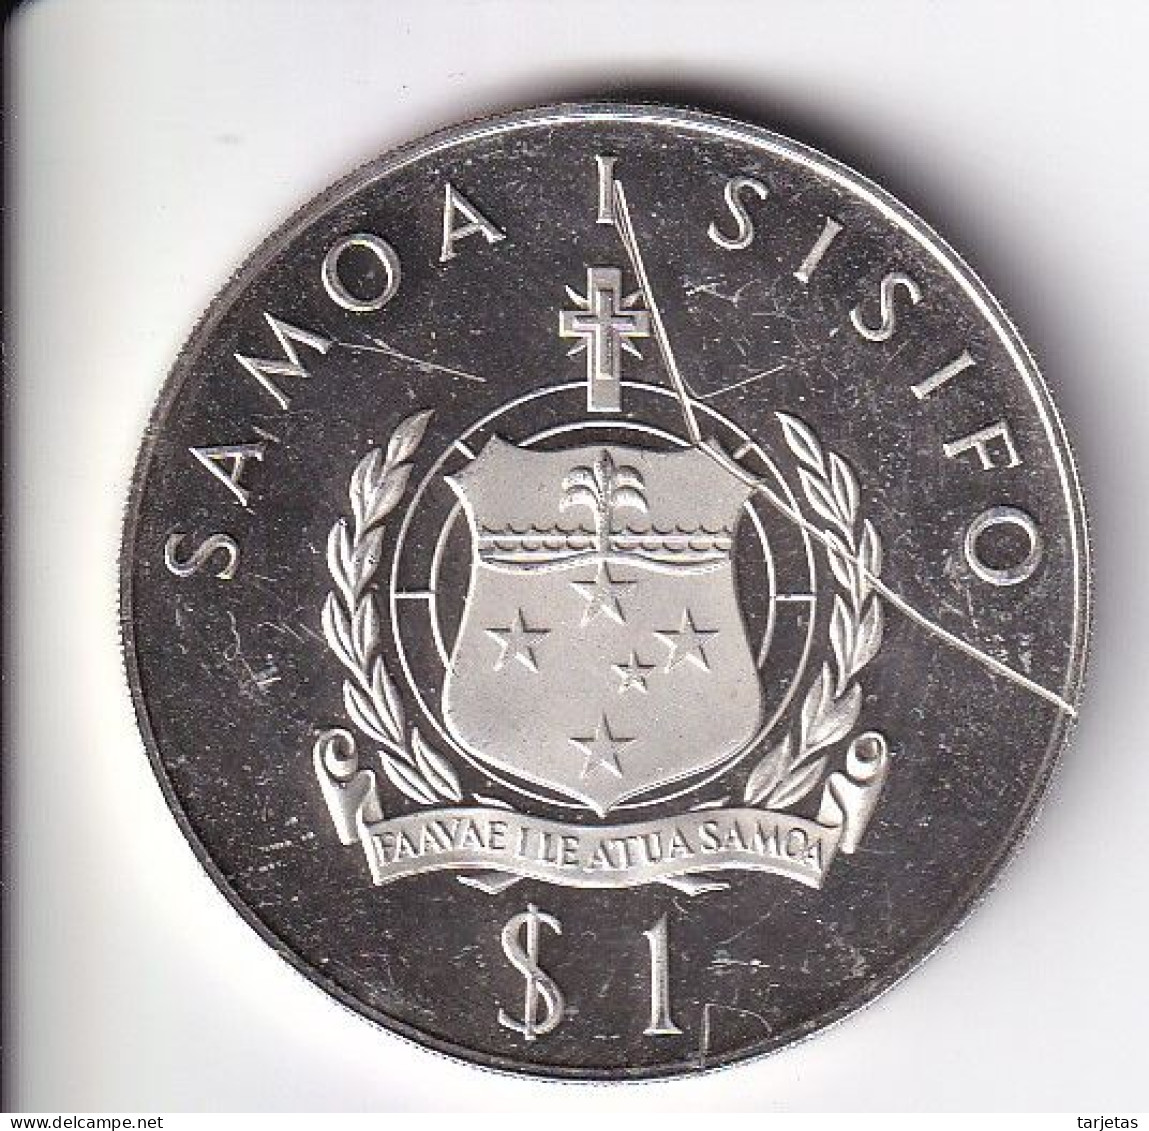 MONEDA DE PLATA DE SAMOA I SISIFO DE 1 DOLLAR DEL AÑO 1977 LINDBERGH FLIGHT - LA DE LA FOTO (CON RAYA DETRAS) - American Samoa